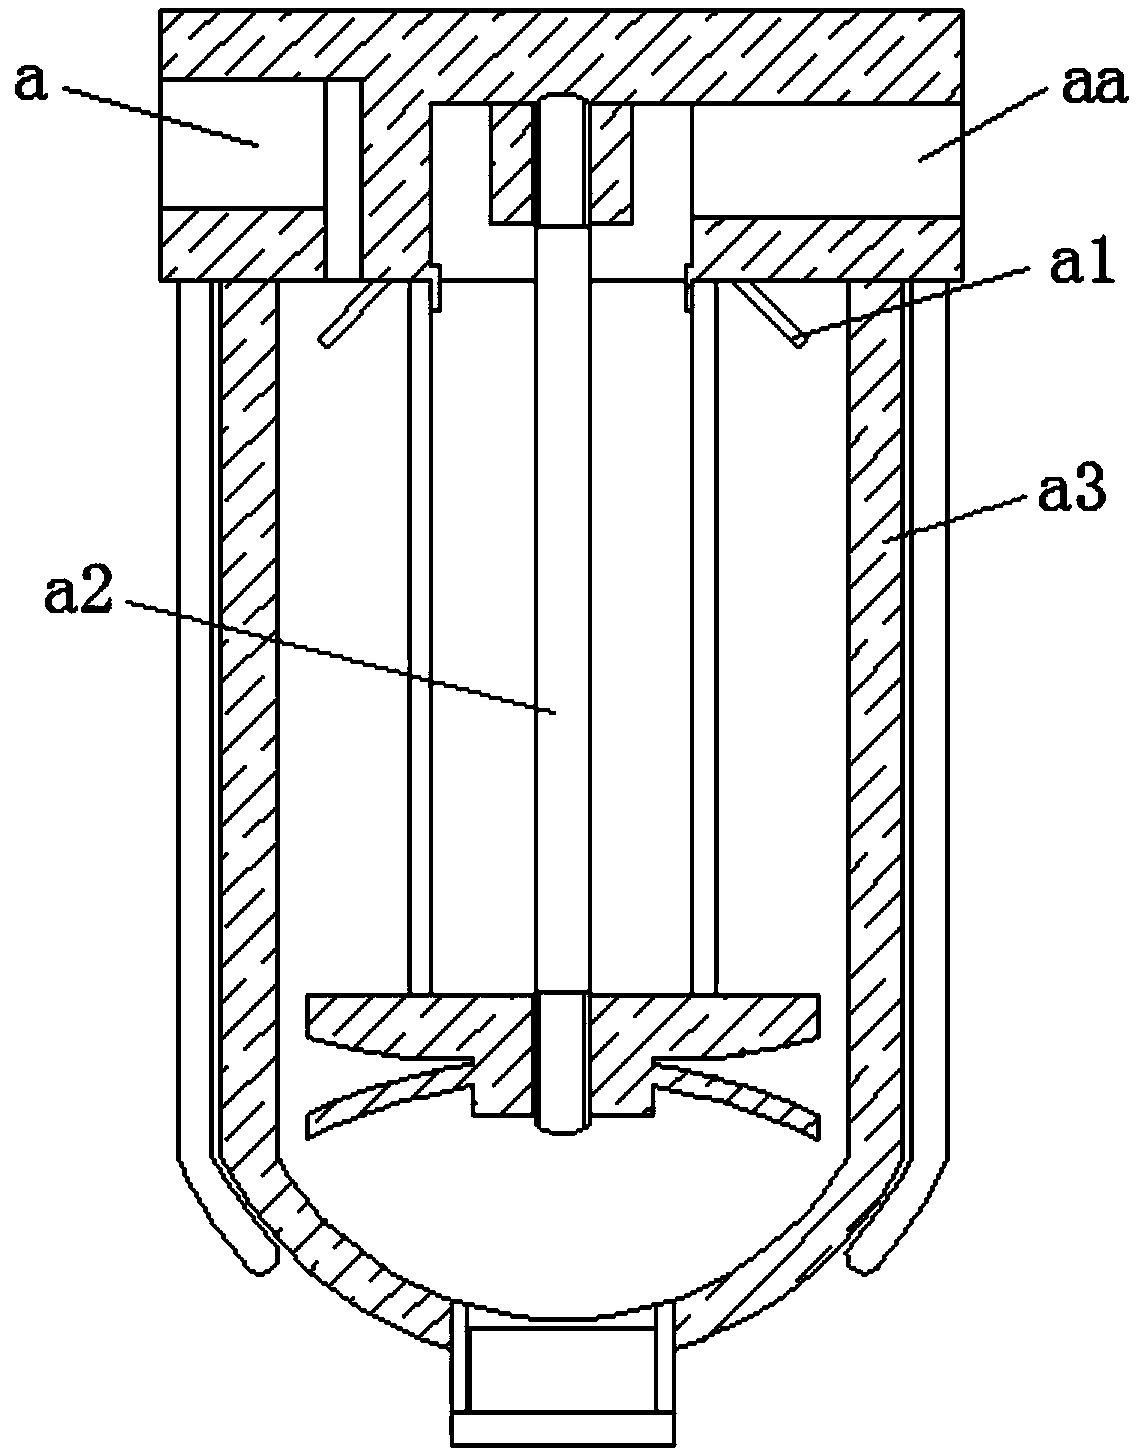 Air filter in pneumatic flinders resistant line (FRL)